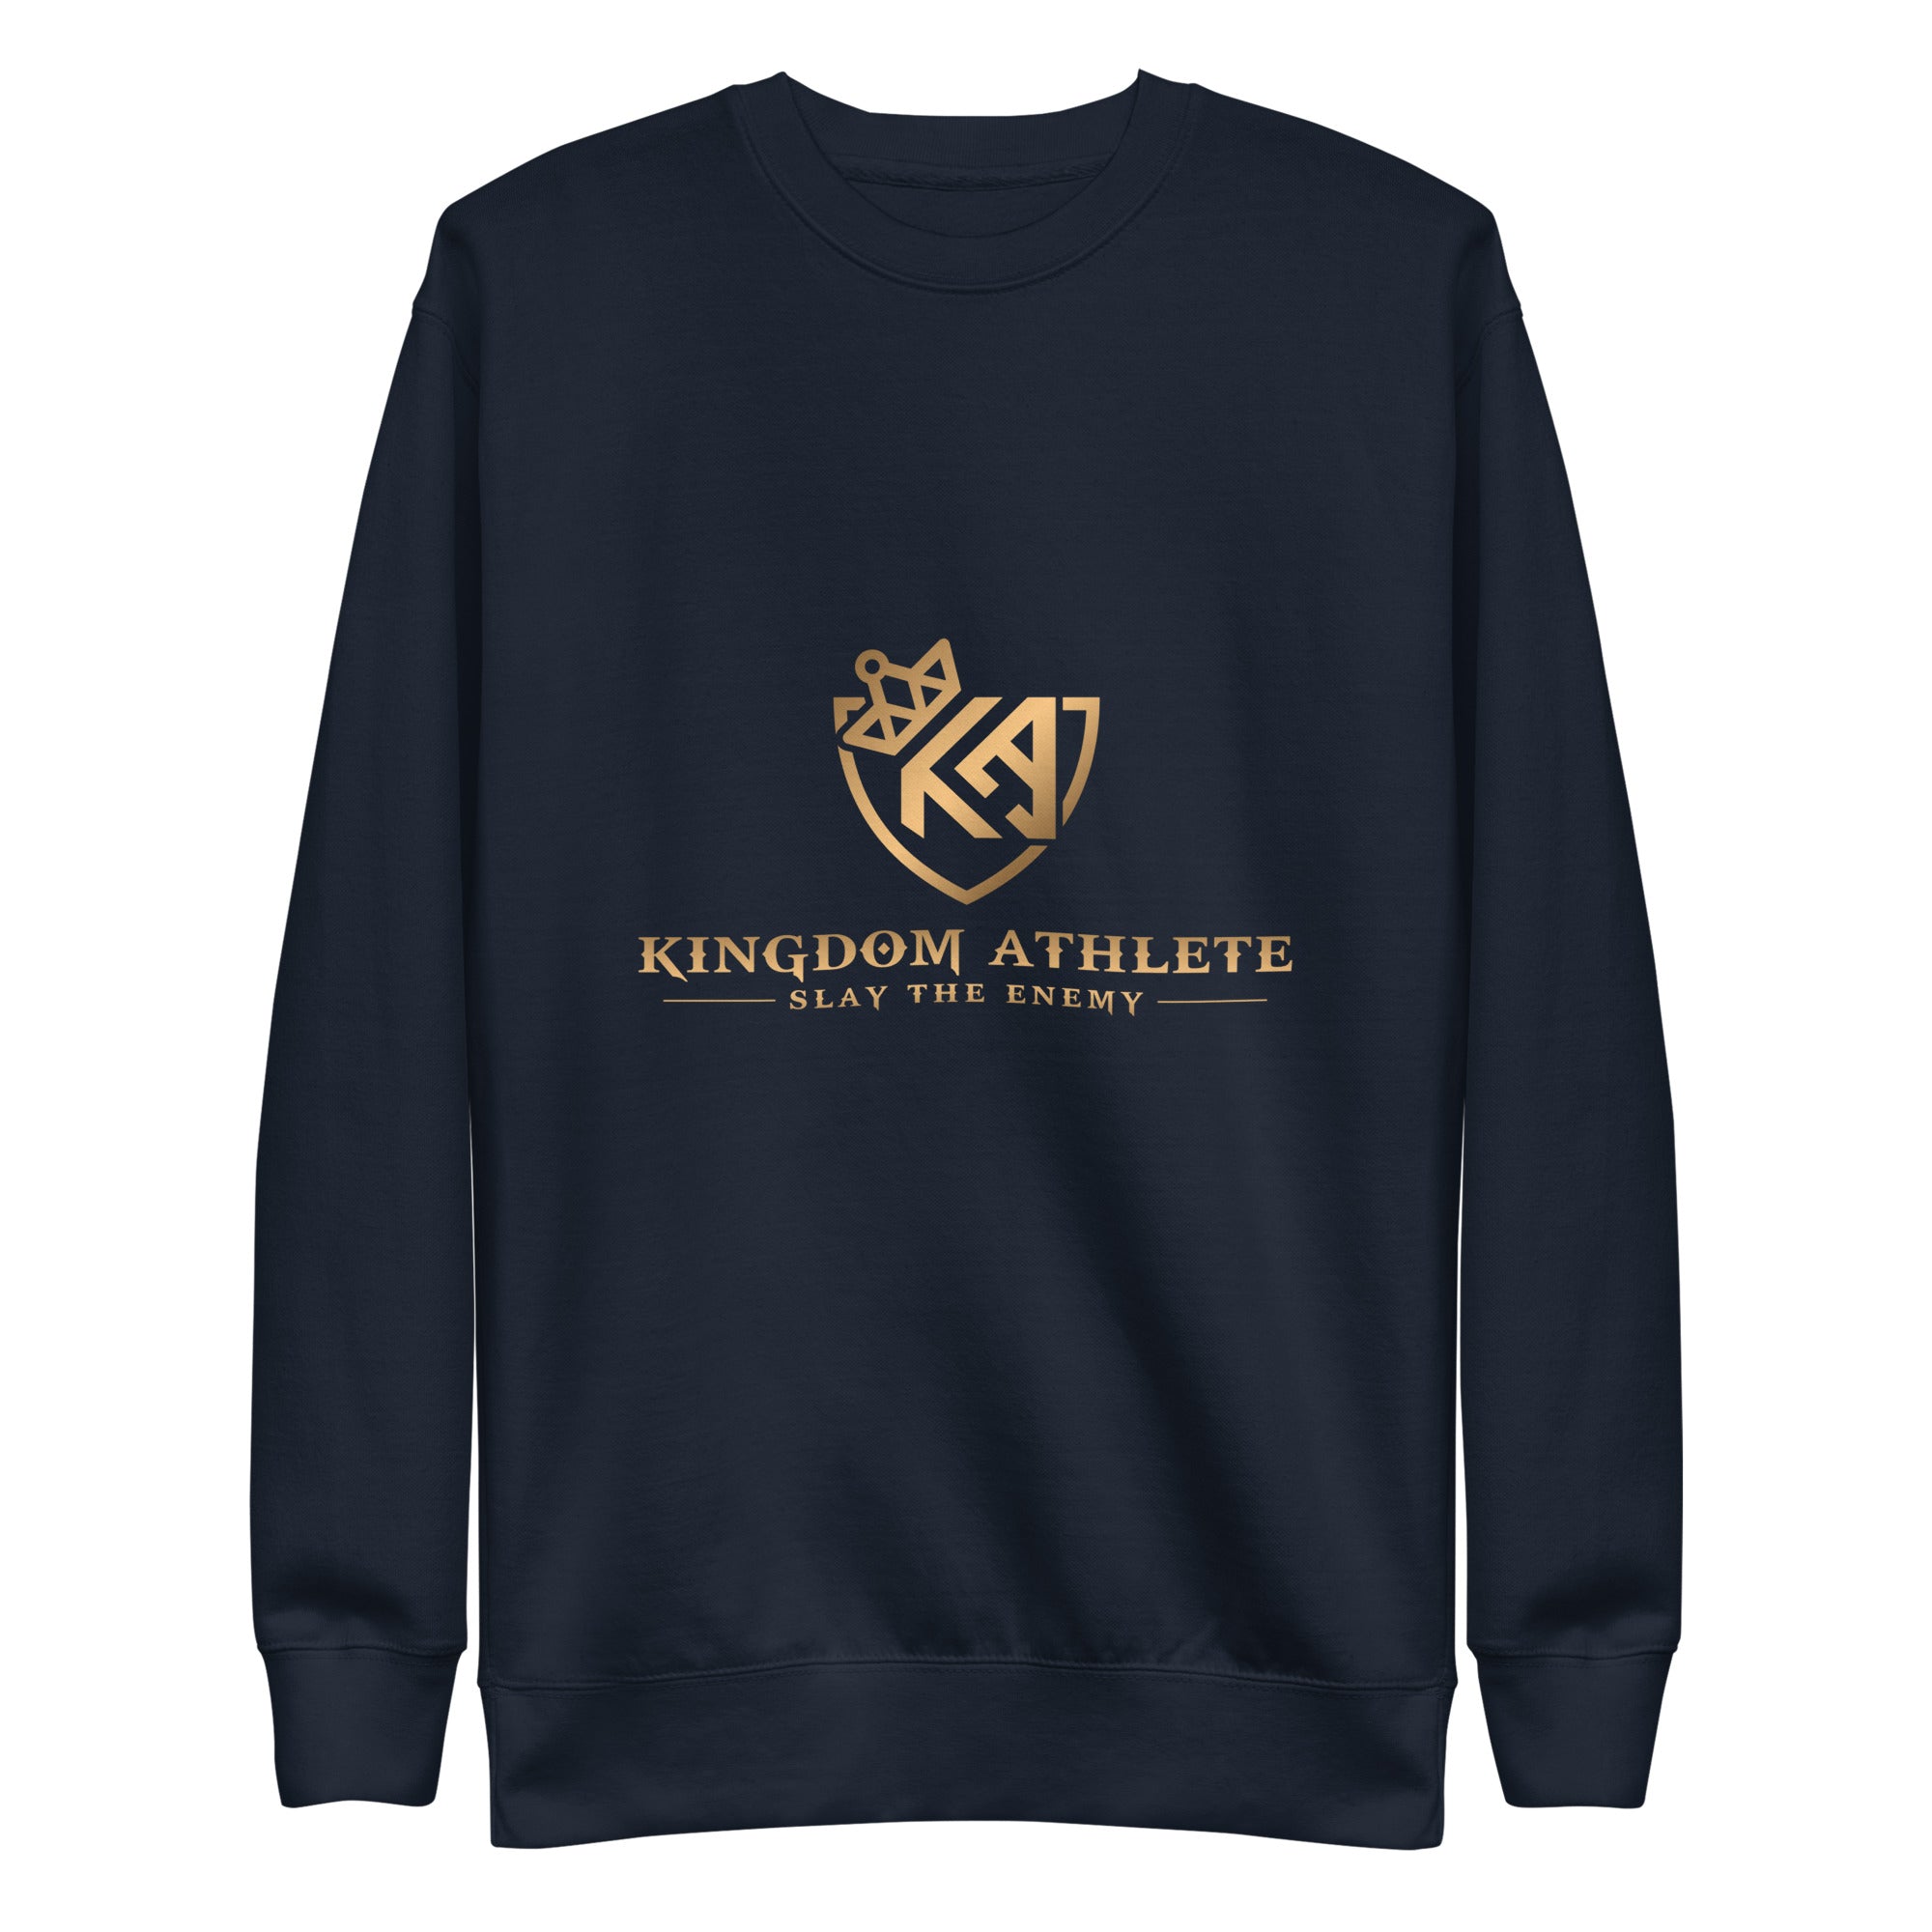 Unisex Premium Sweatshirt - kingdom athlete s